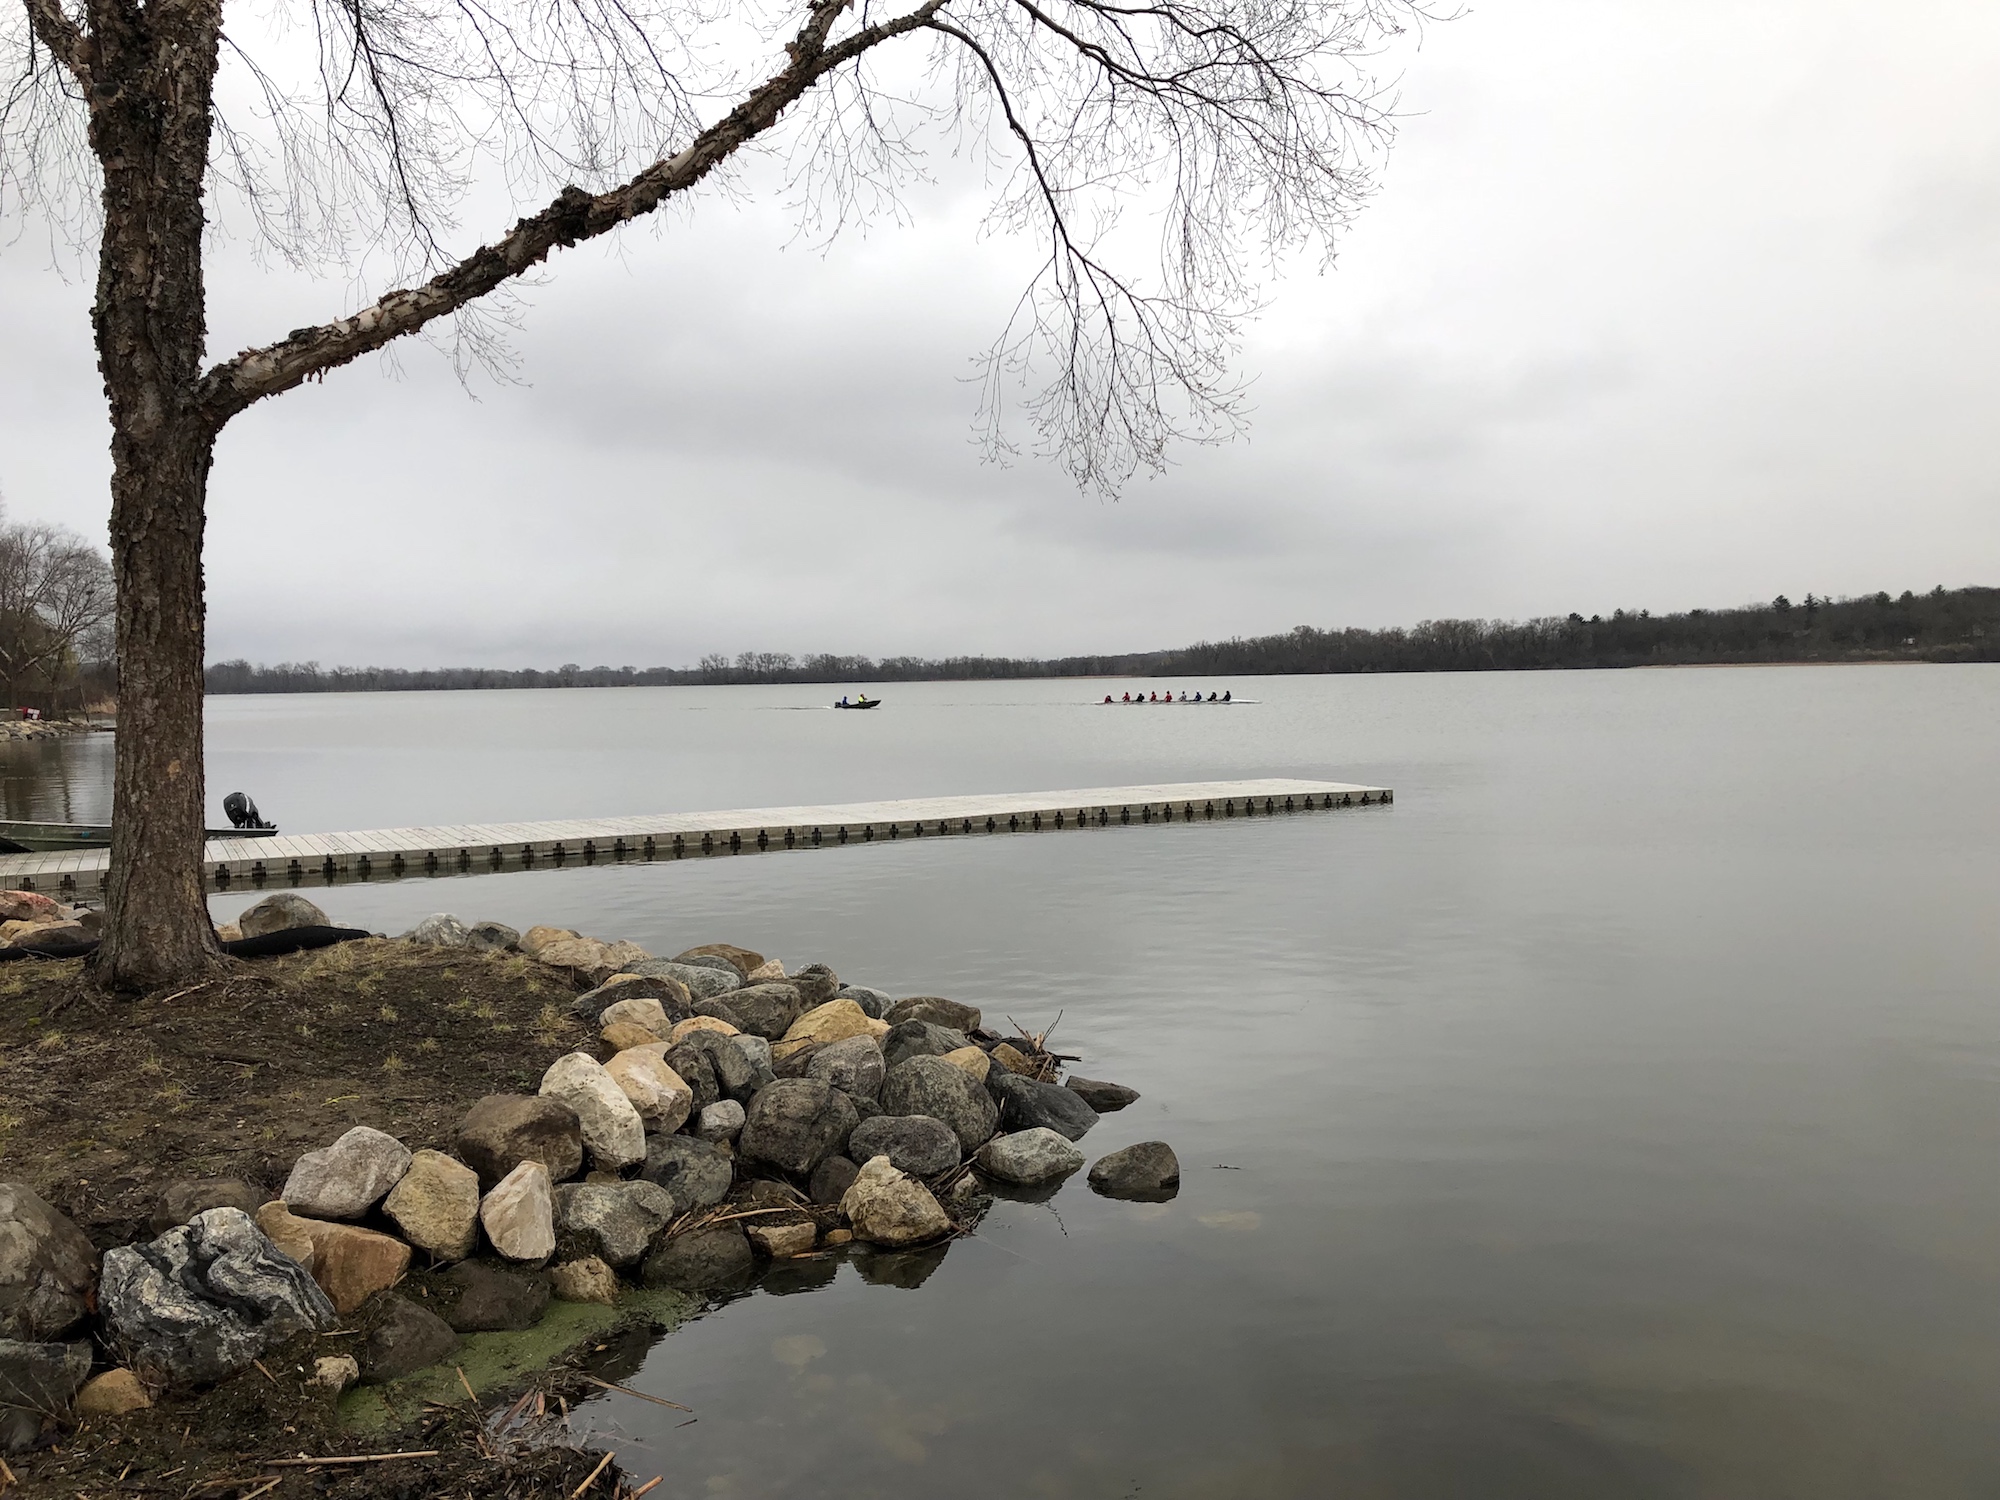 Lake Wingra on April 18, 2019.